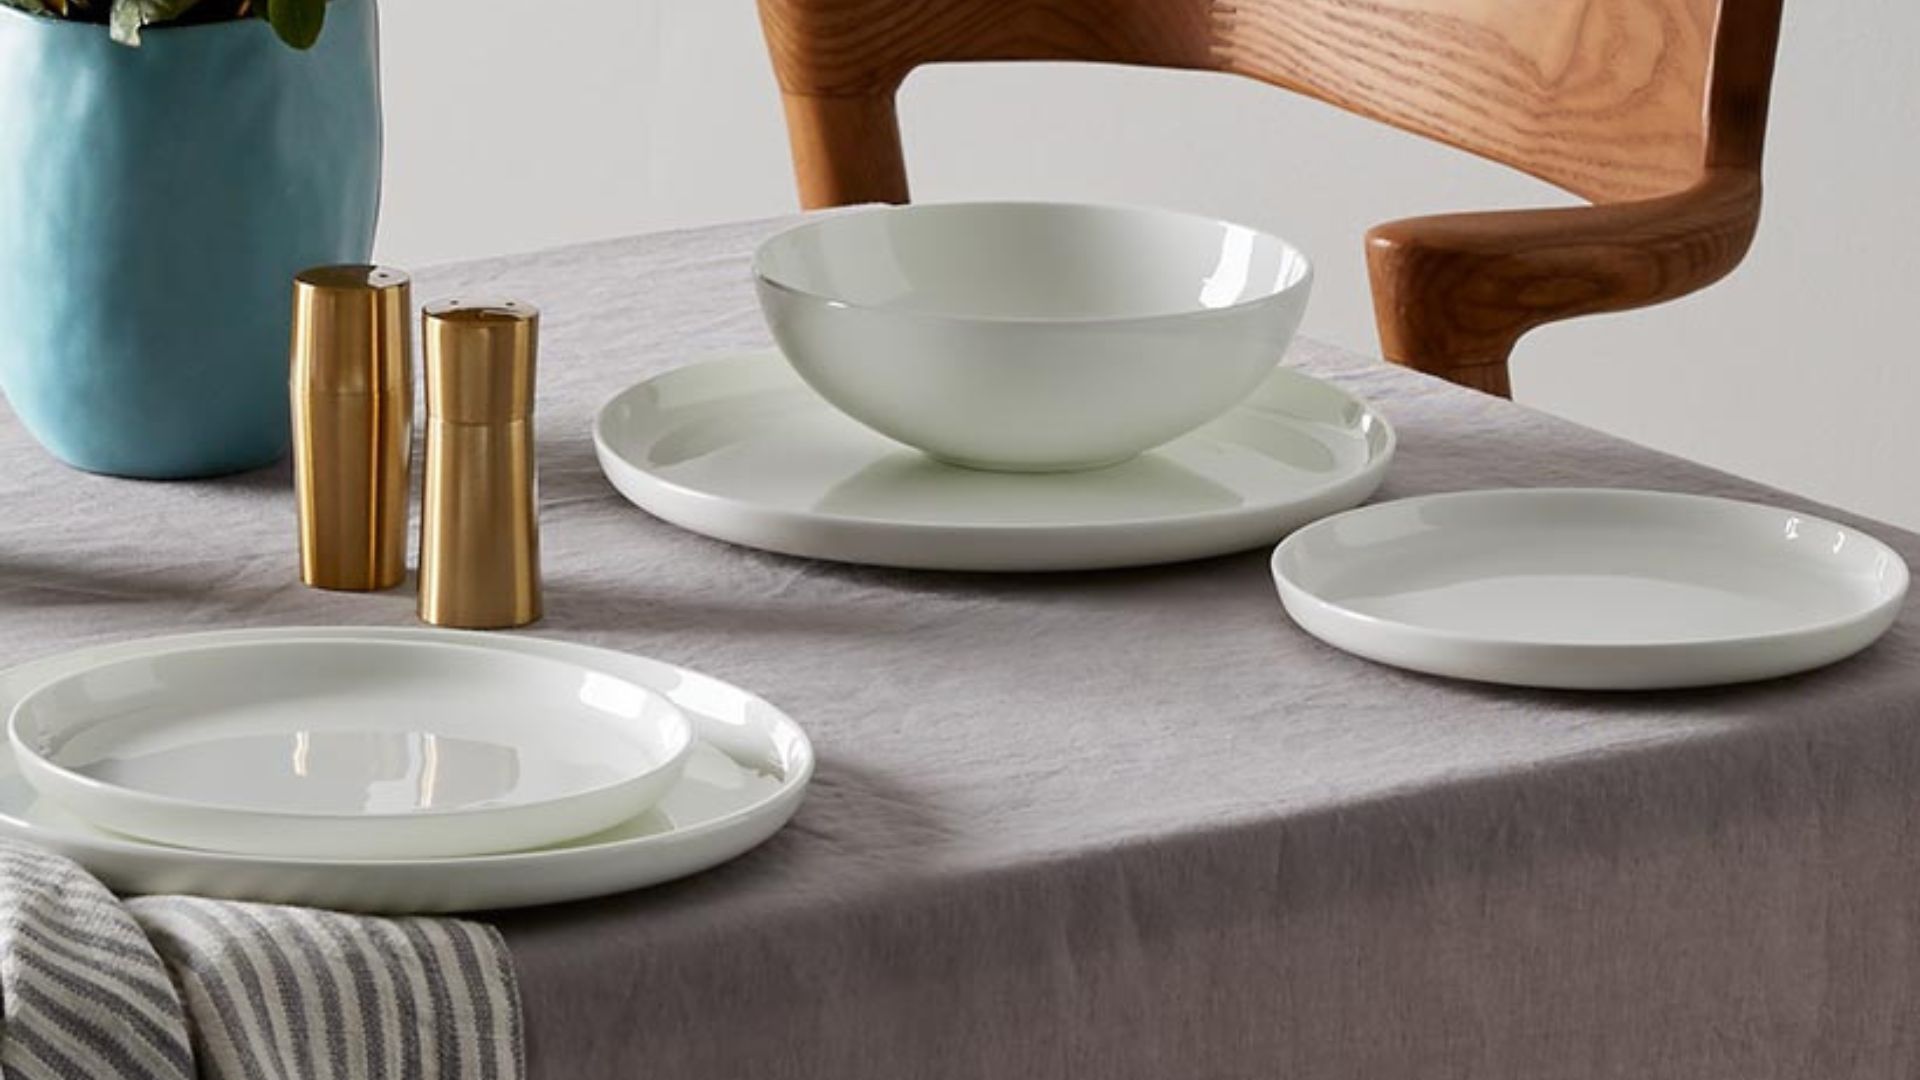 Benefits of bone china tableware